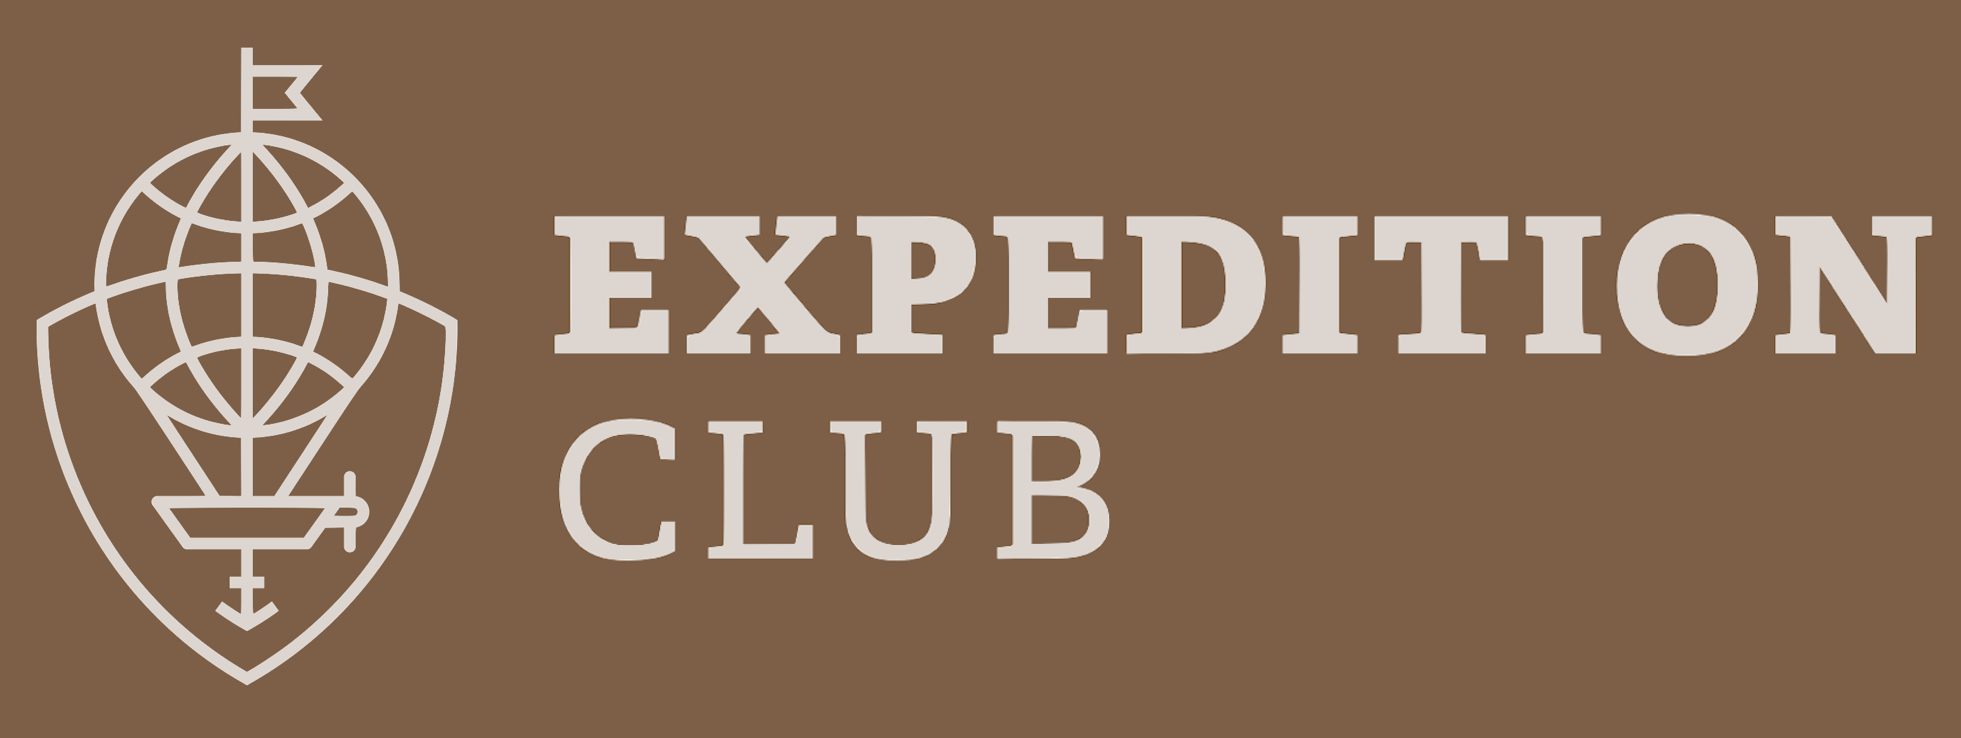 Expedition Club Blog